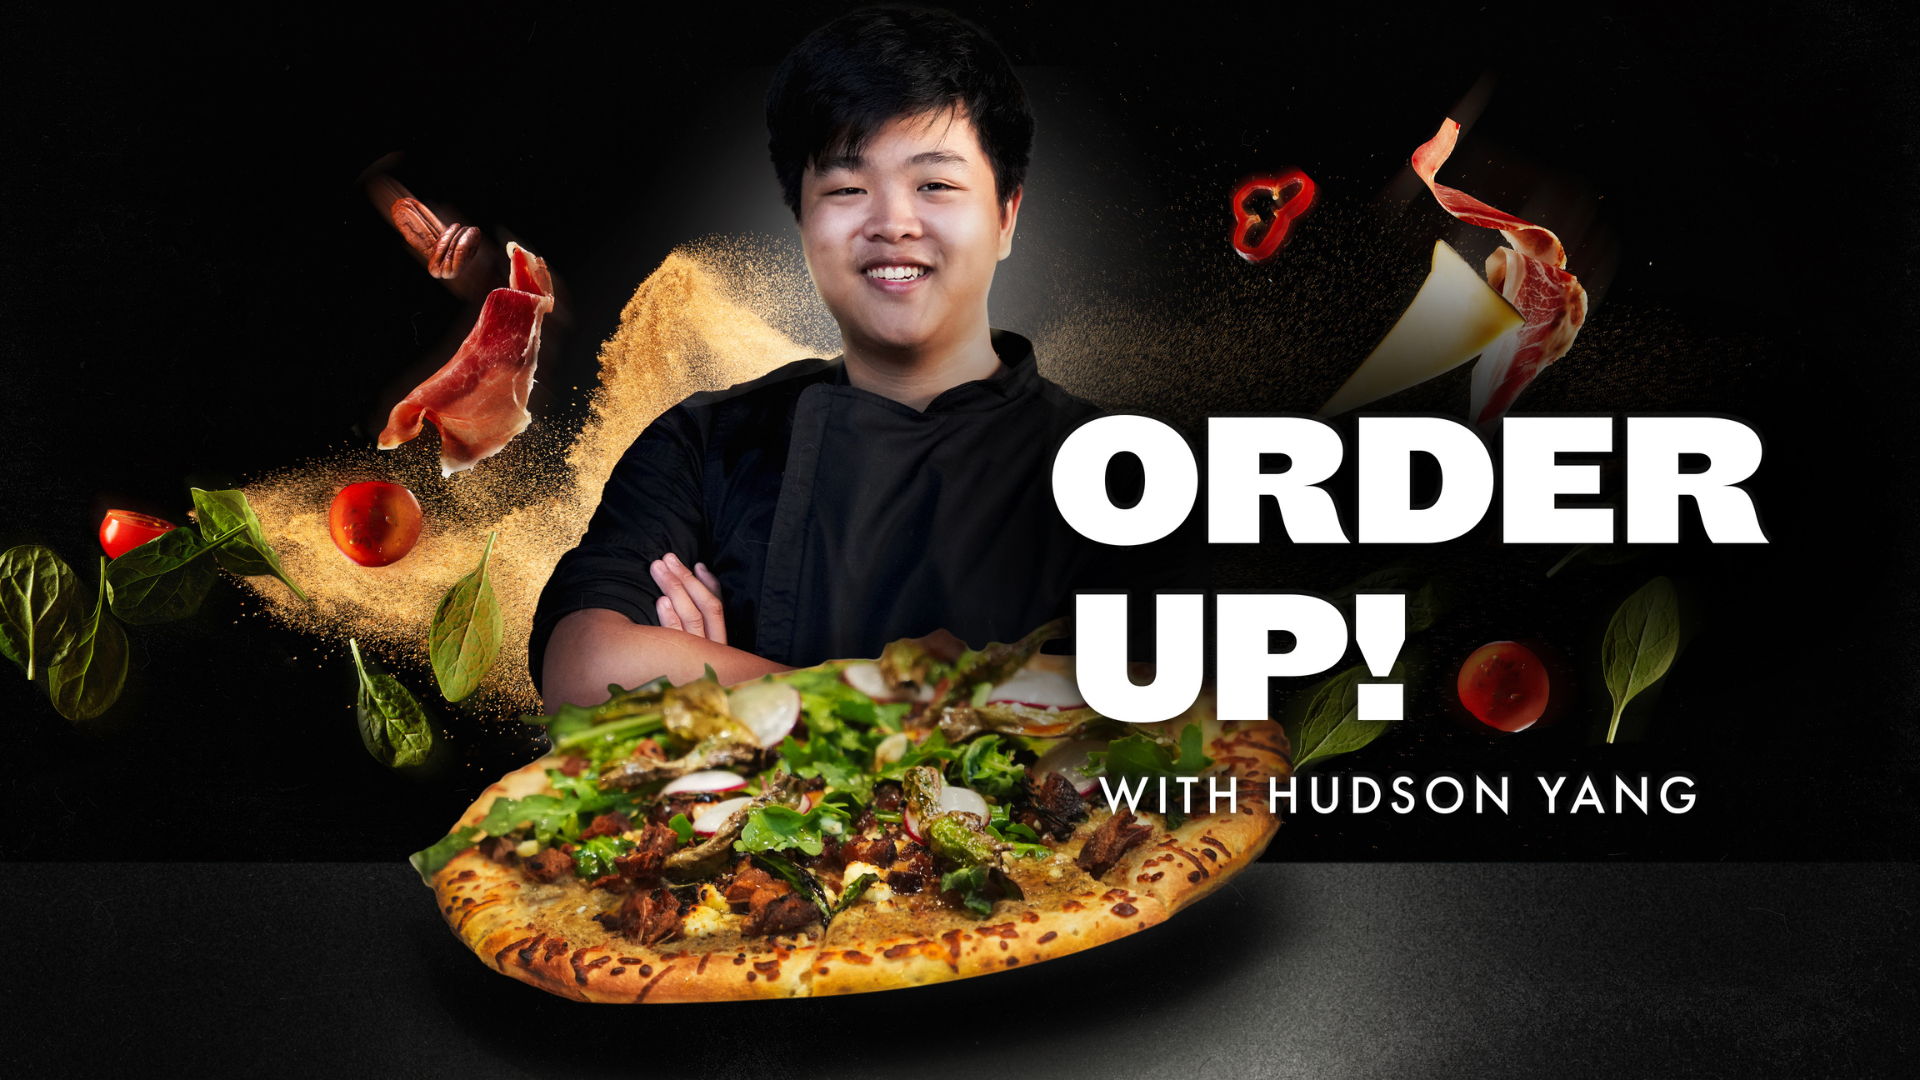 ORDER UP! with Hudson Yang